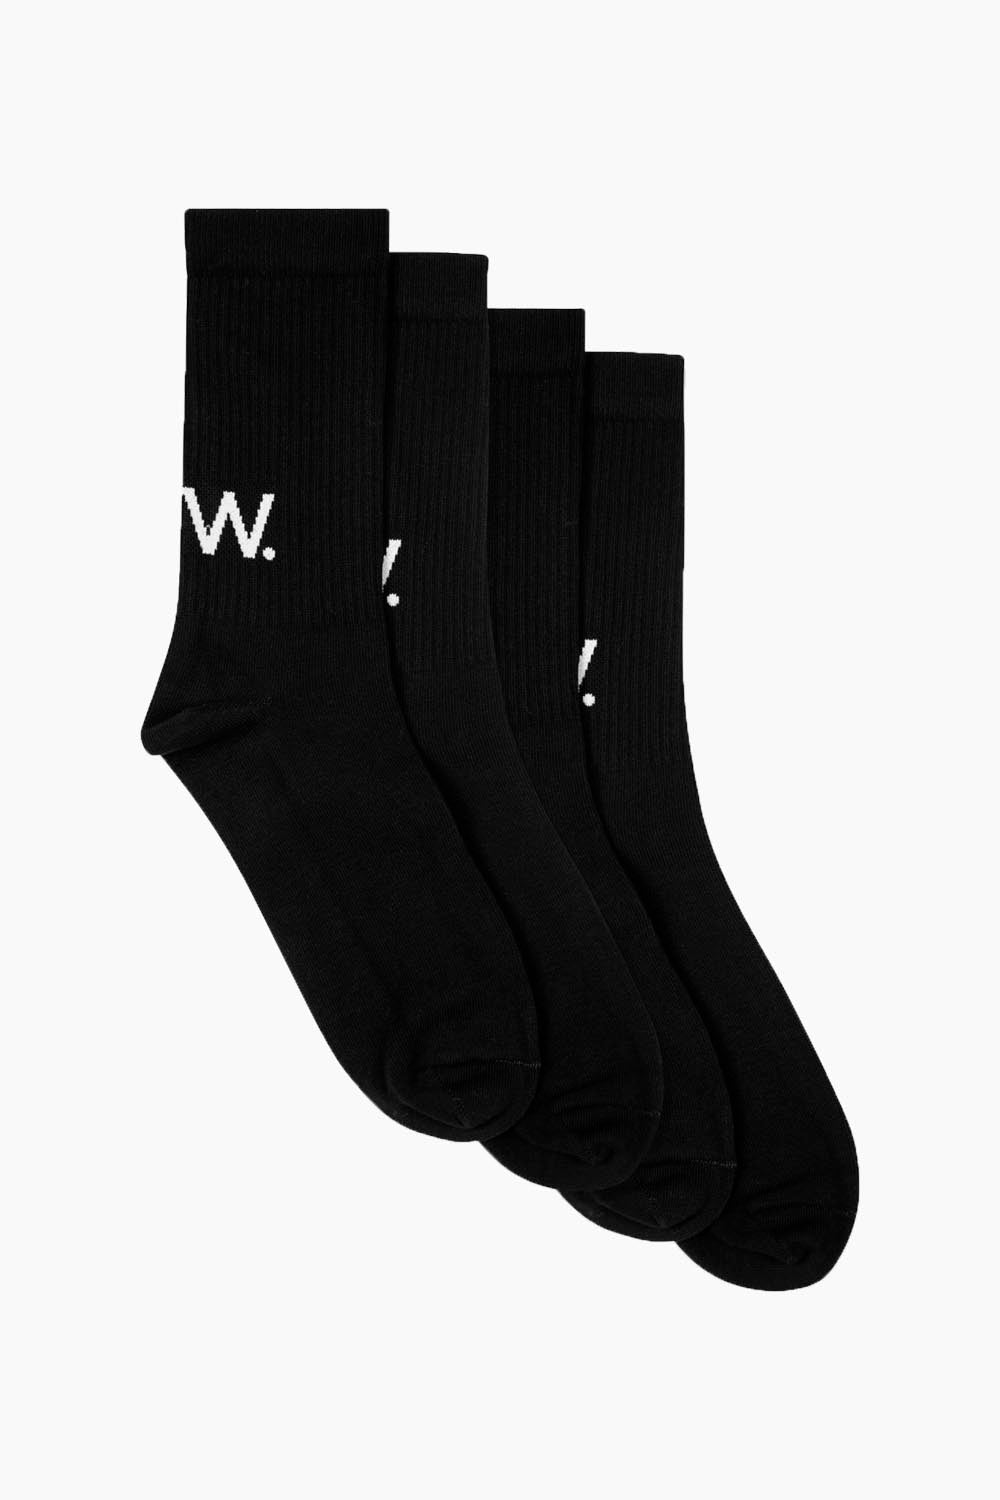 Gail 2-pack Socks - Black - Wood Wood - Sort 40-42 (2007139006048)